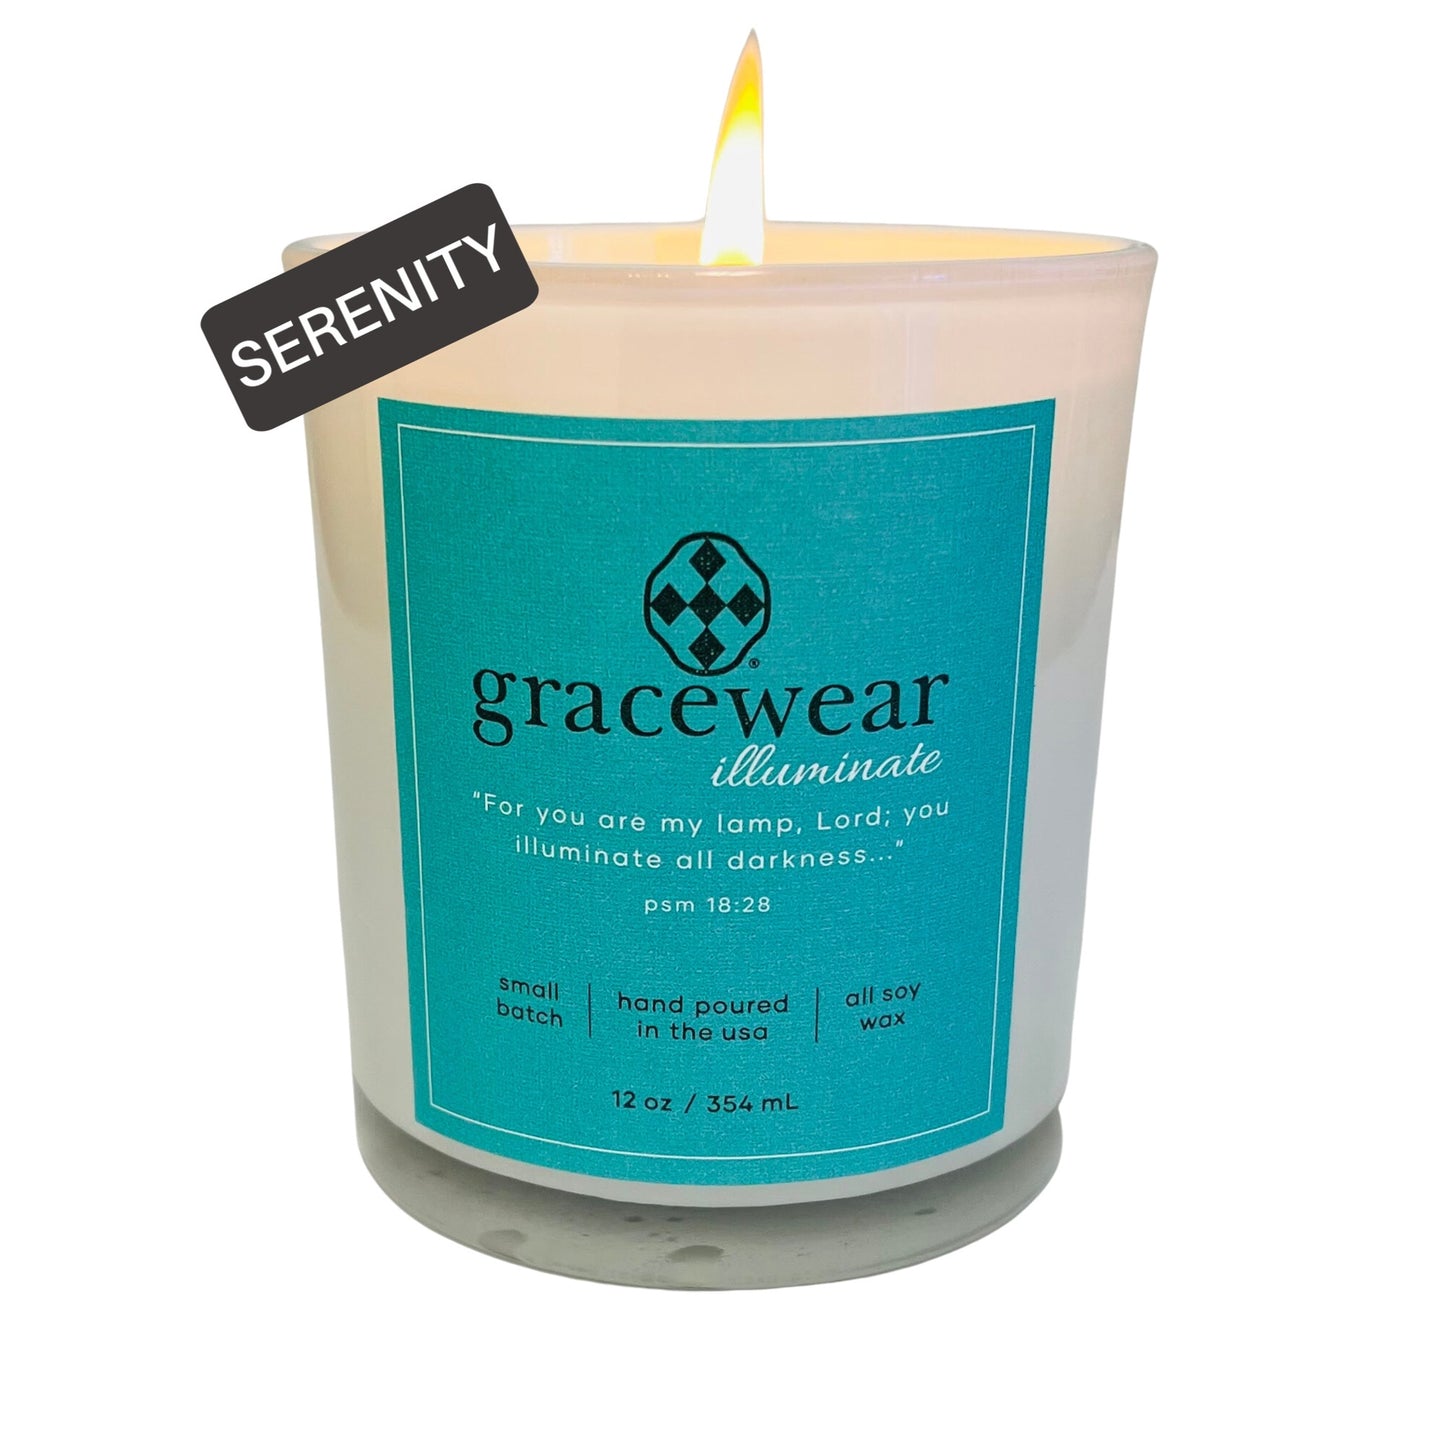 Gracewear Illuminate candle- SERENITY